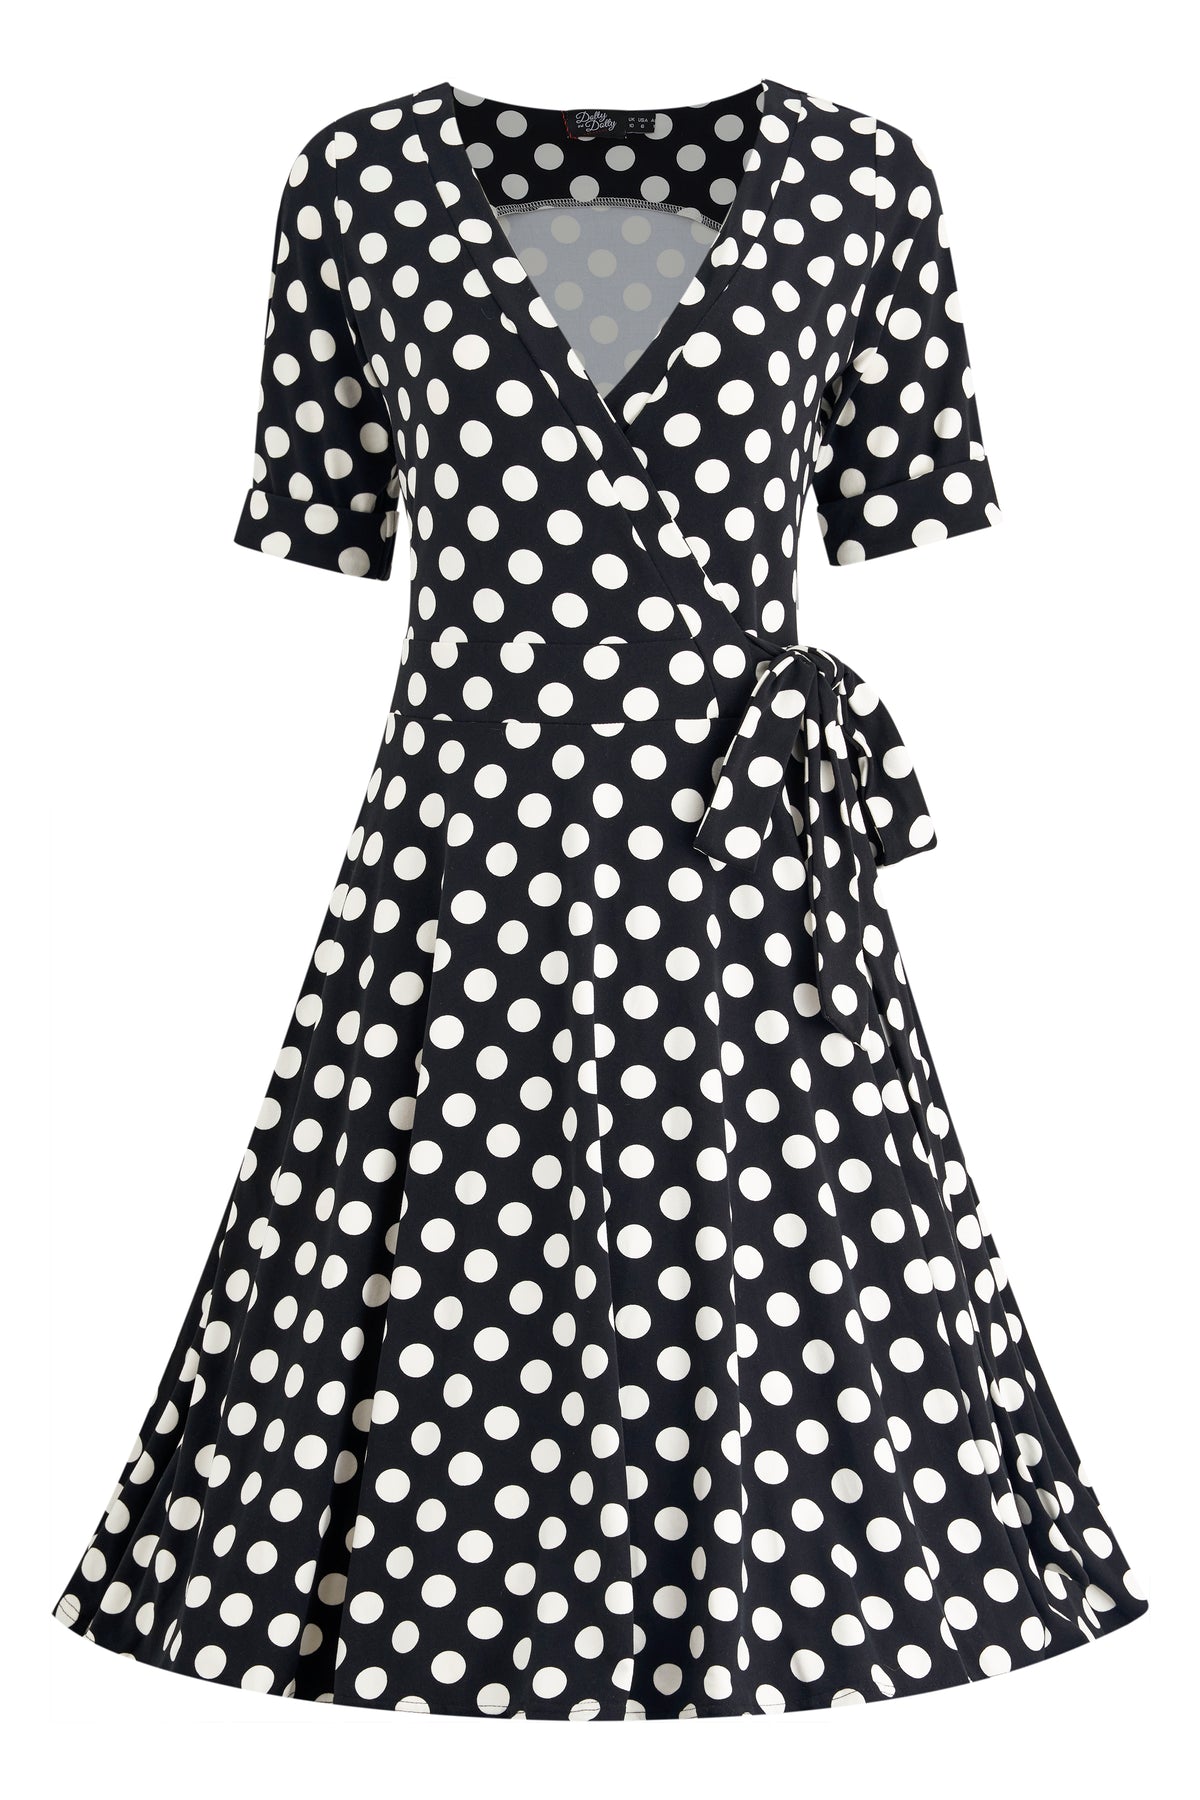 Matilda Wrap Day Dress in Black/White Polka Dot Print